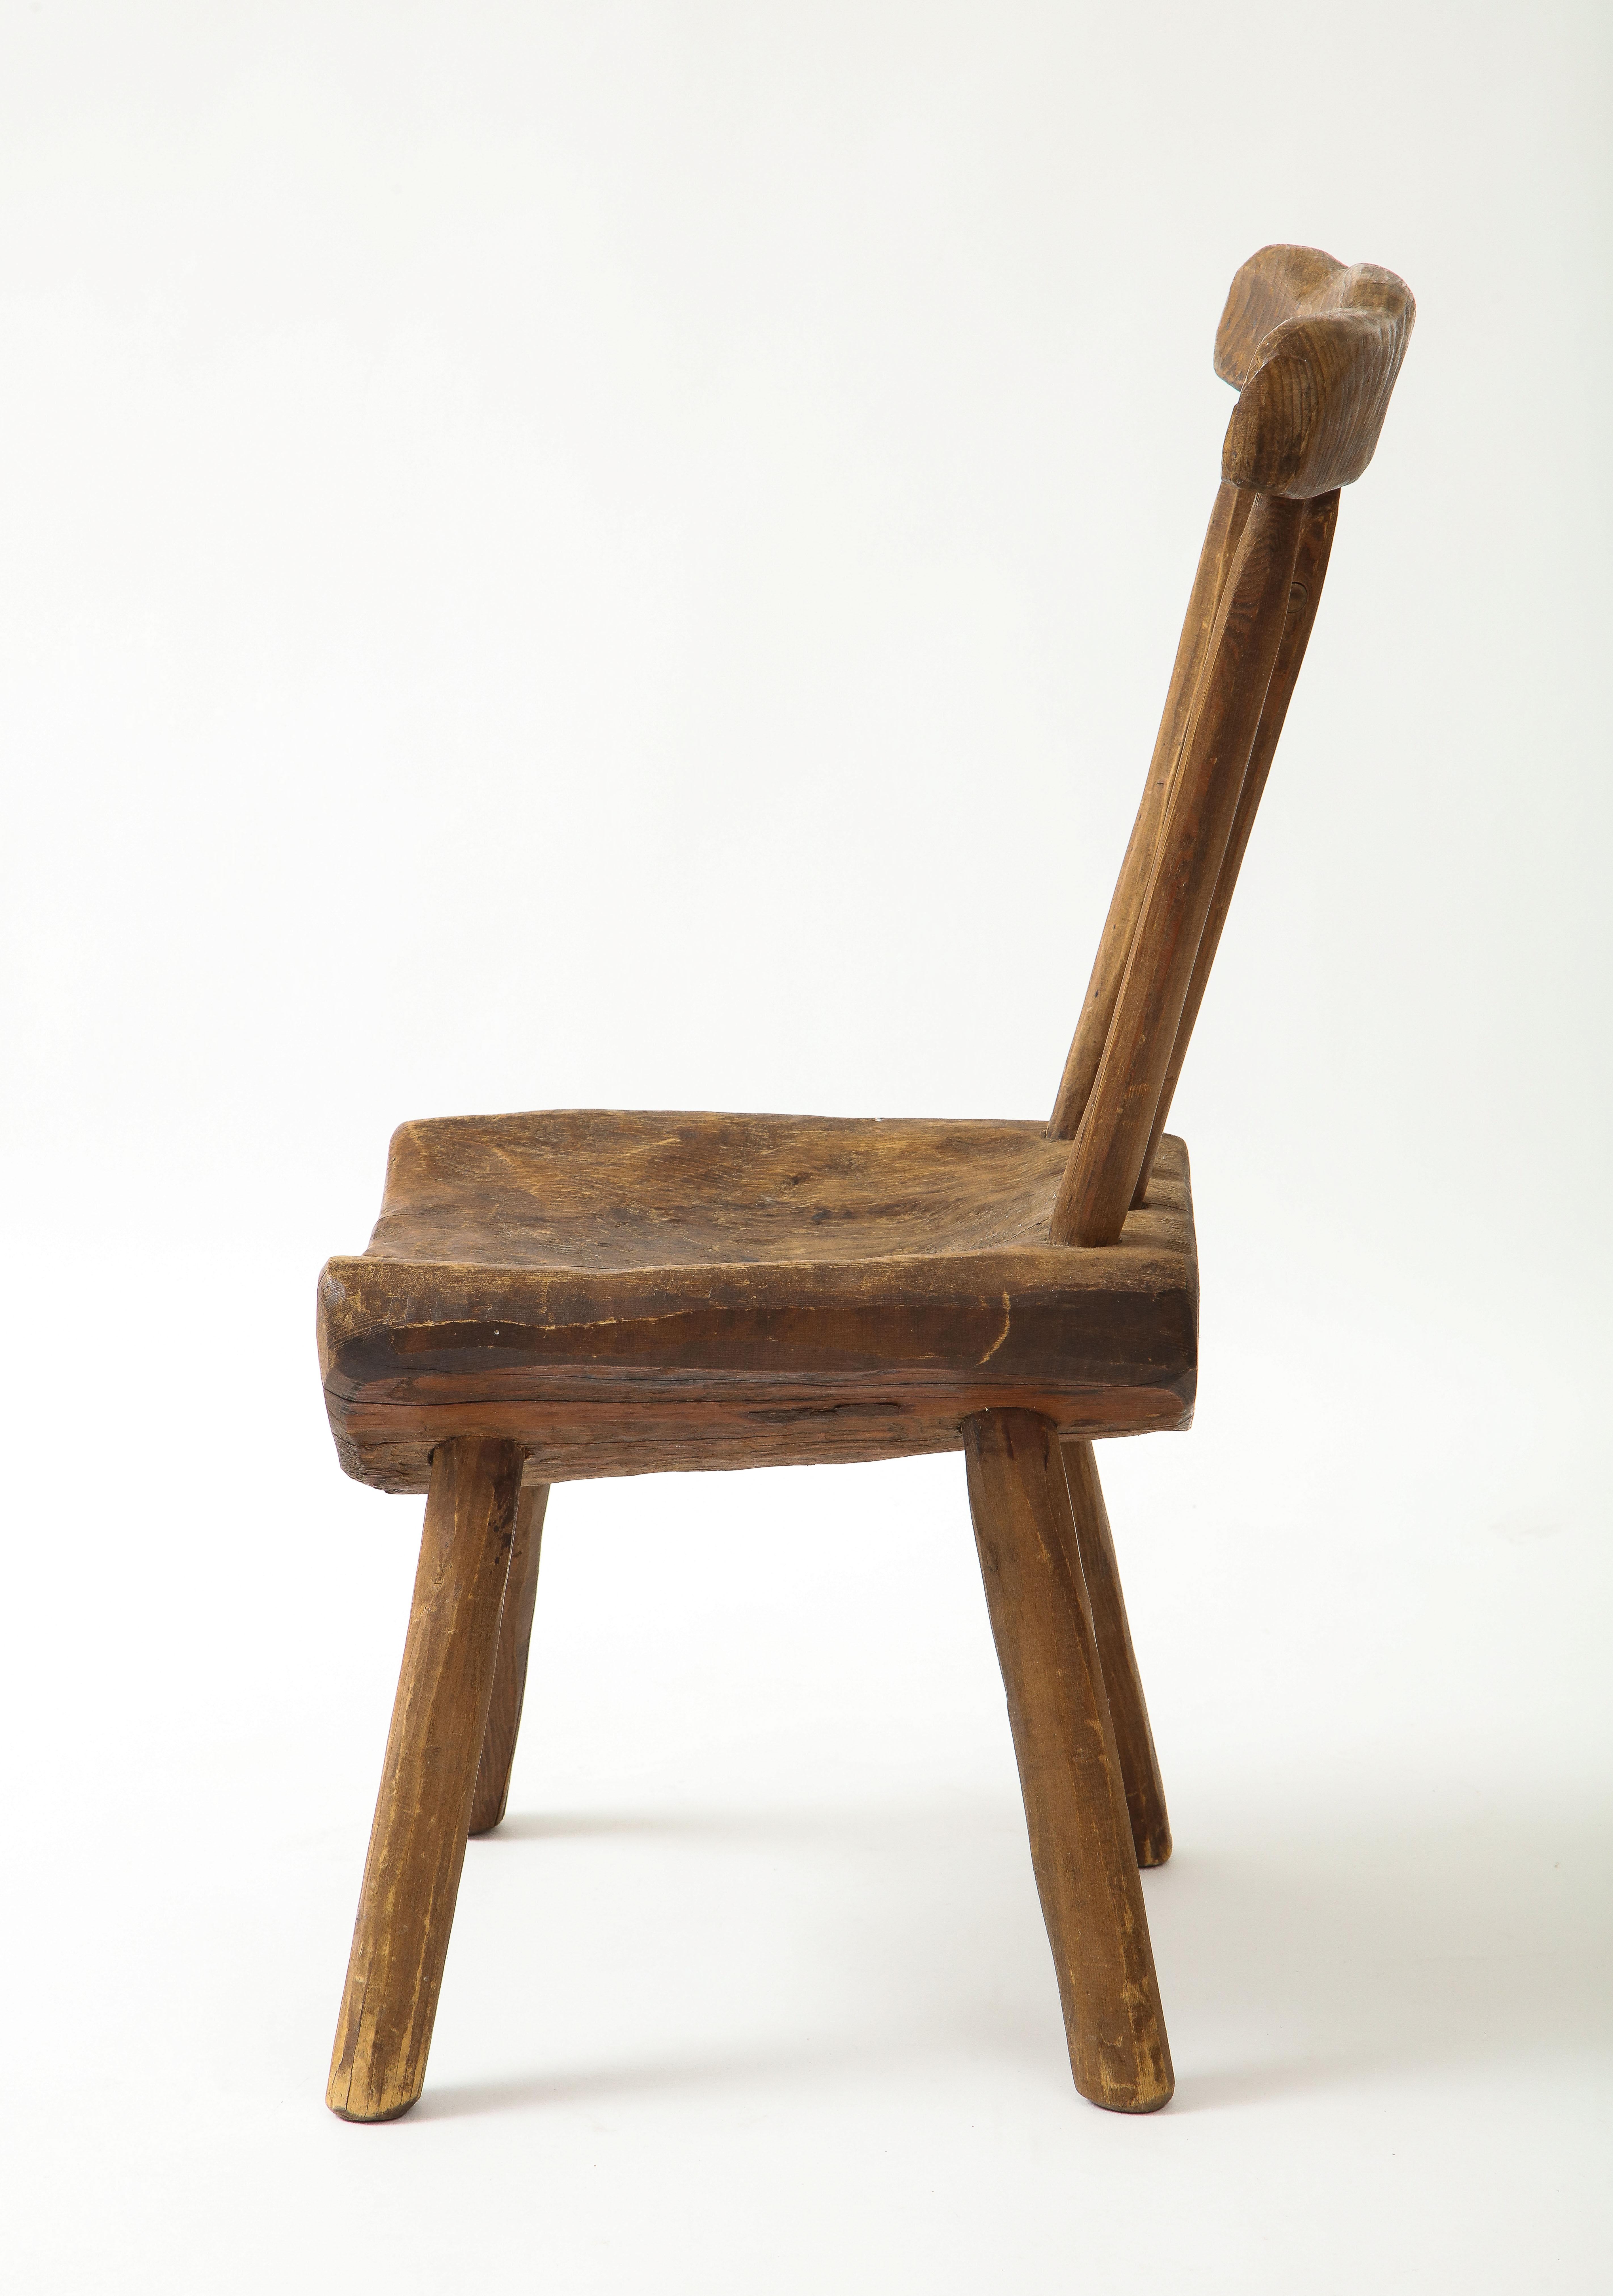 19th Century 19th C./Early 20th C. French Folk Art Chair